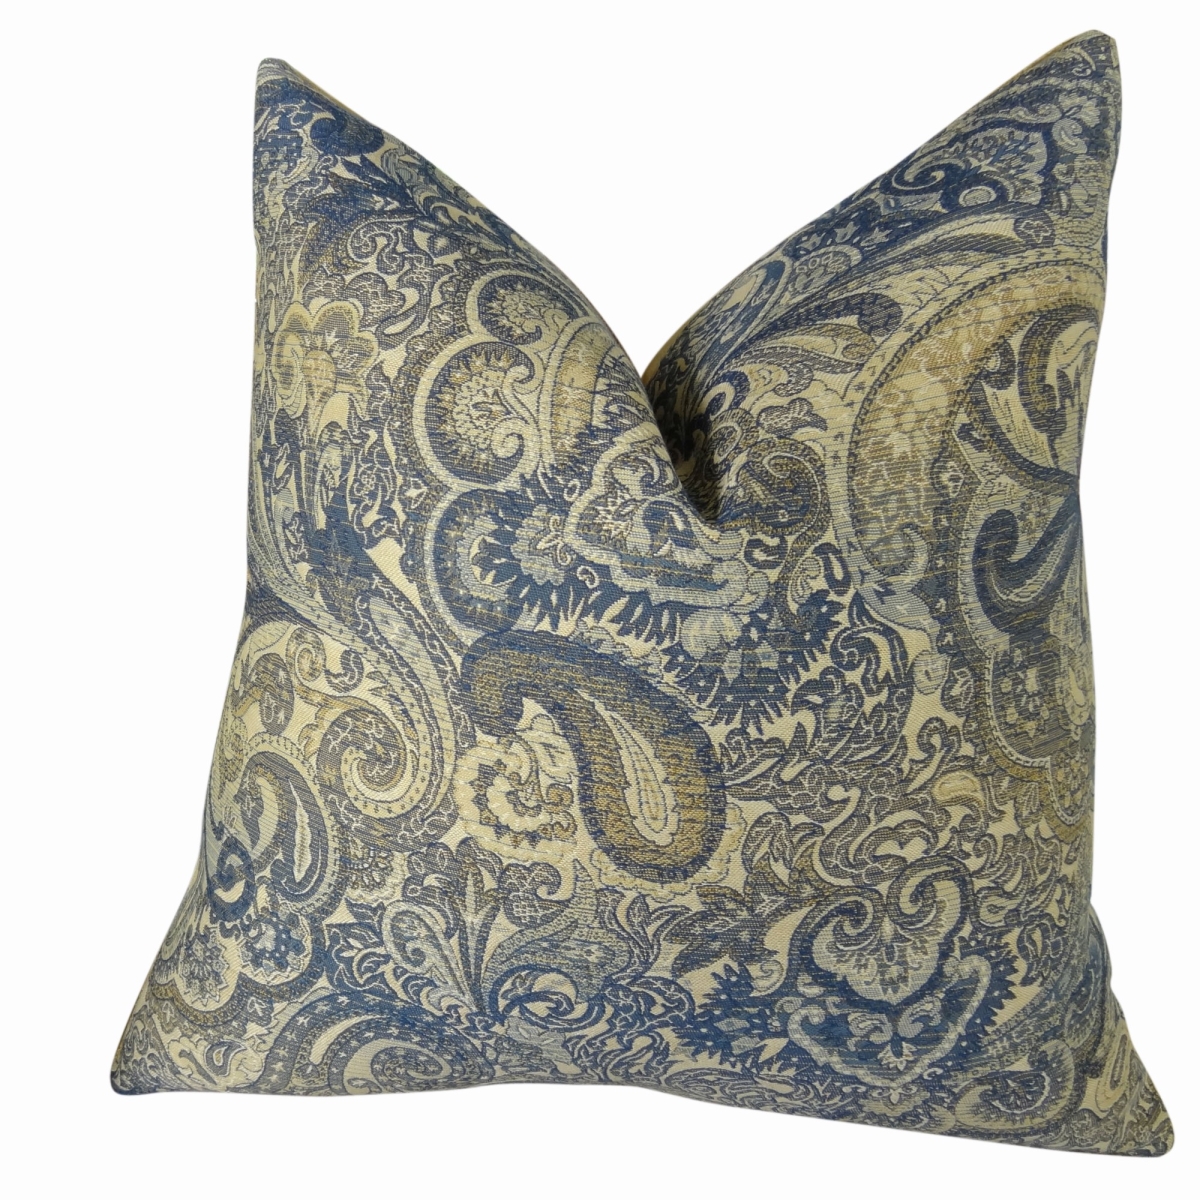 Paciotti Handmade Throw Pillow - Navy - Blue & Taupe - 18 x 18 in -  DwellingDesigns, DW3131227